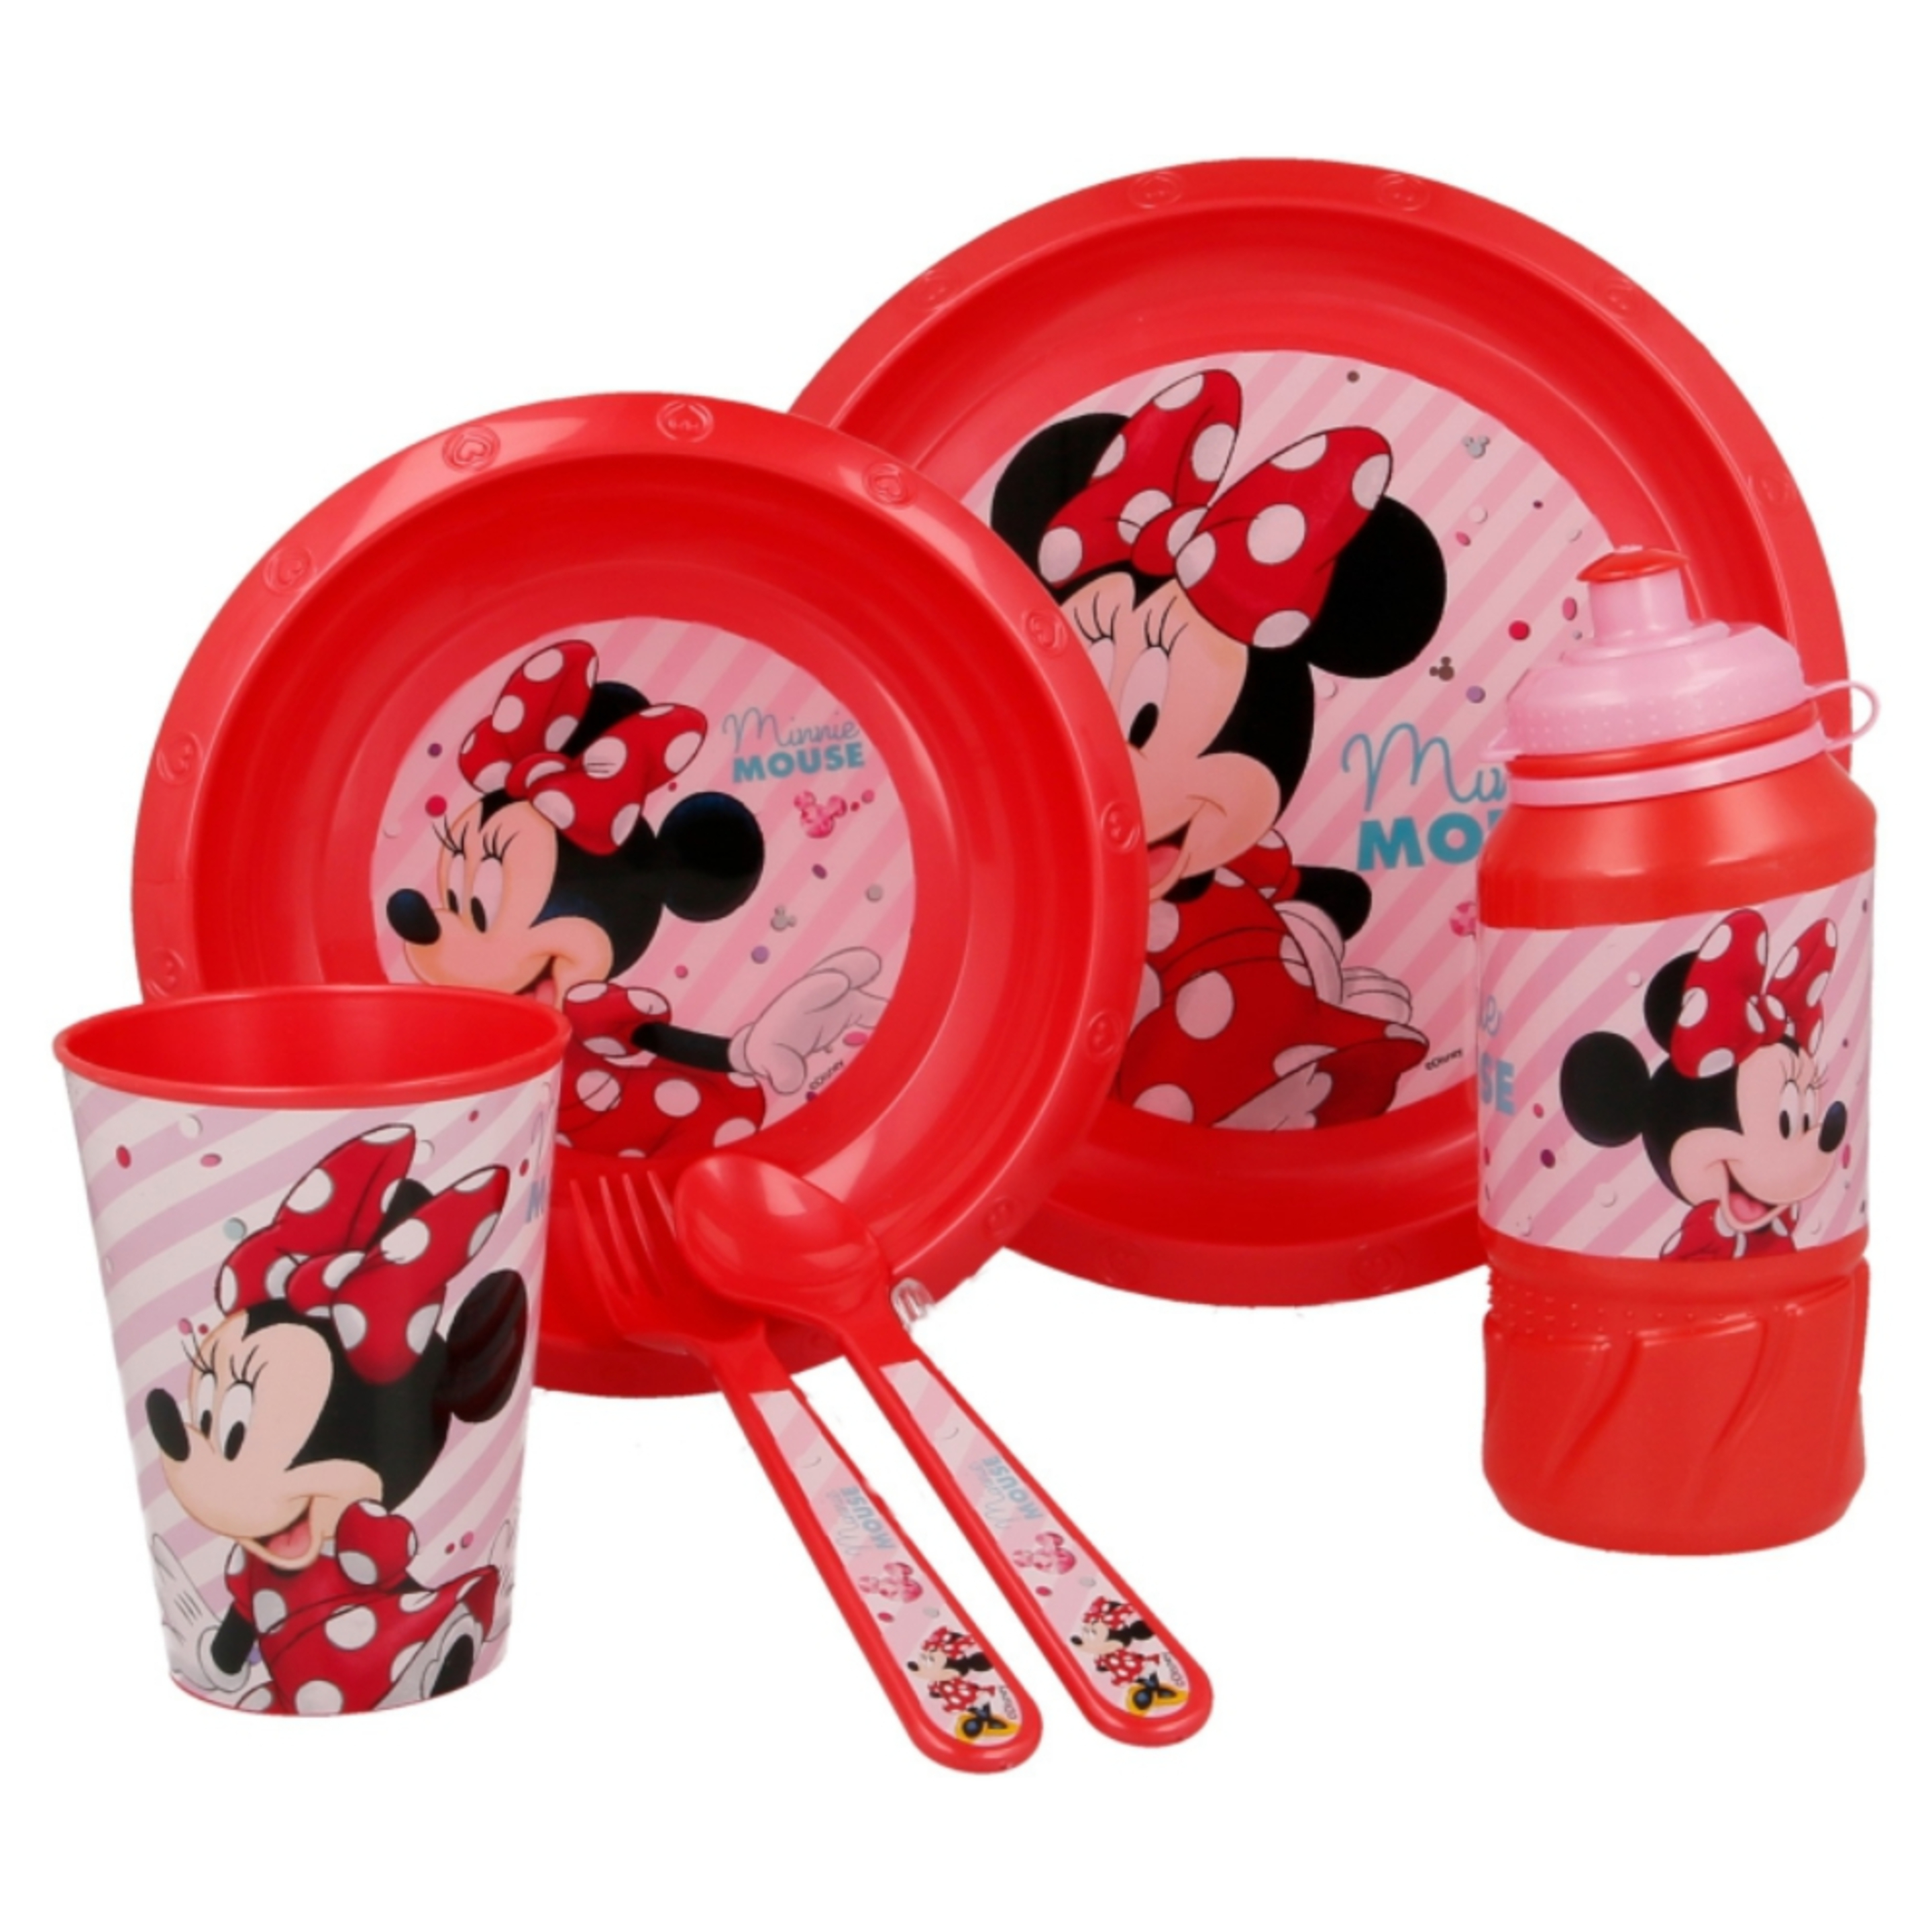 Set De Menaje Minnie Mouse 62393 - rojo - 